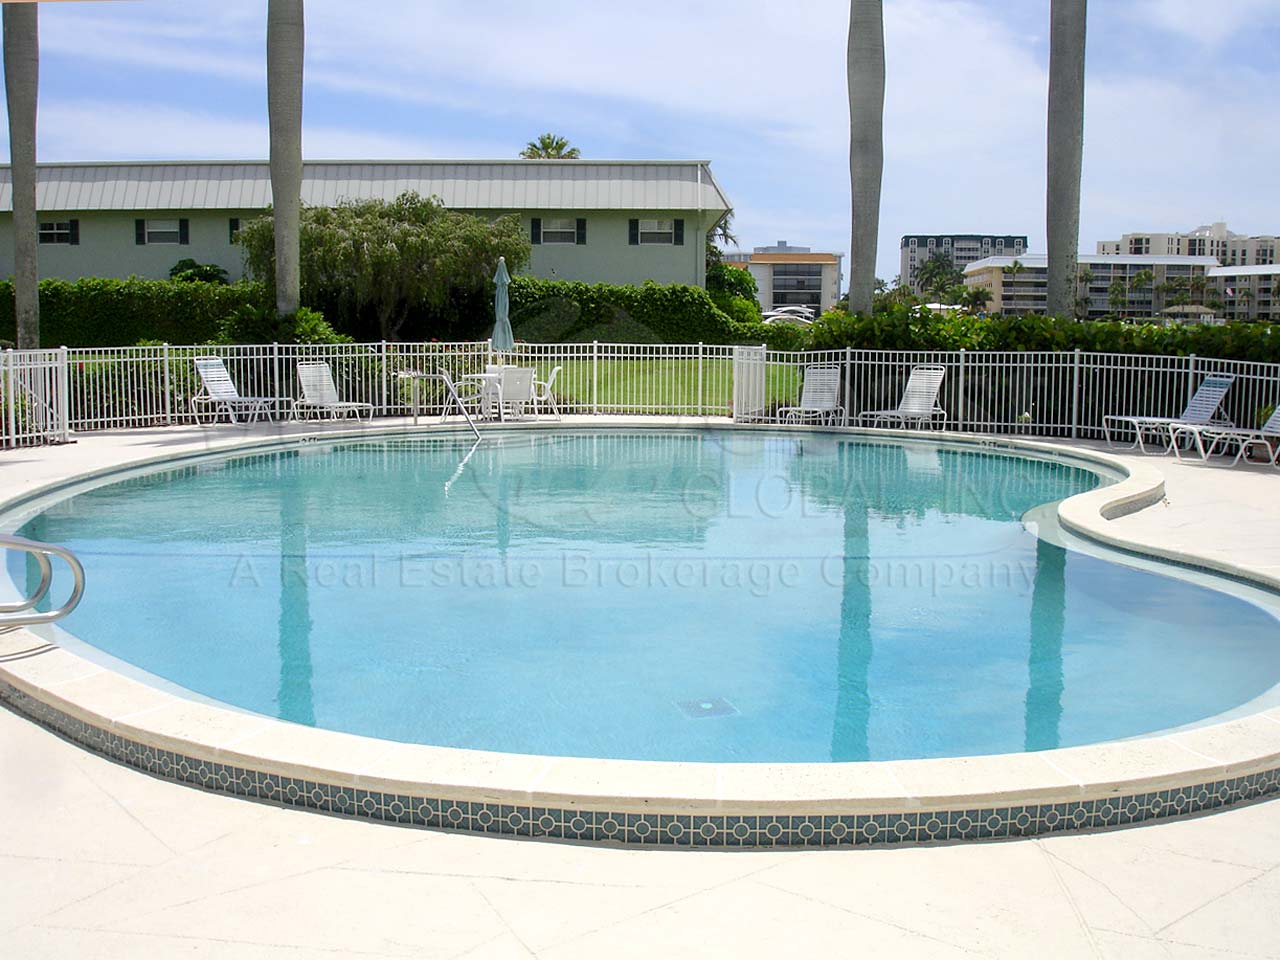 Orleans Community Pool